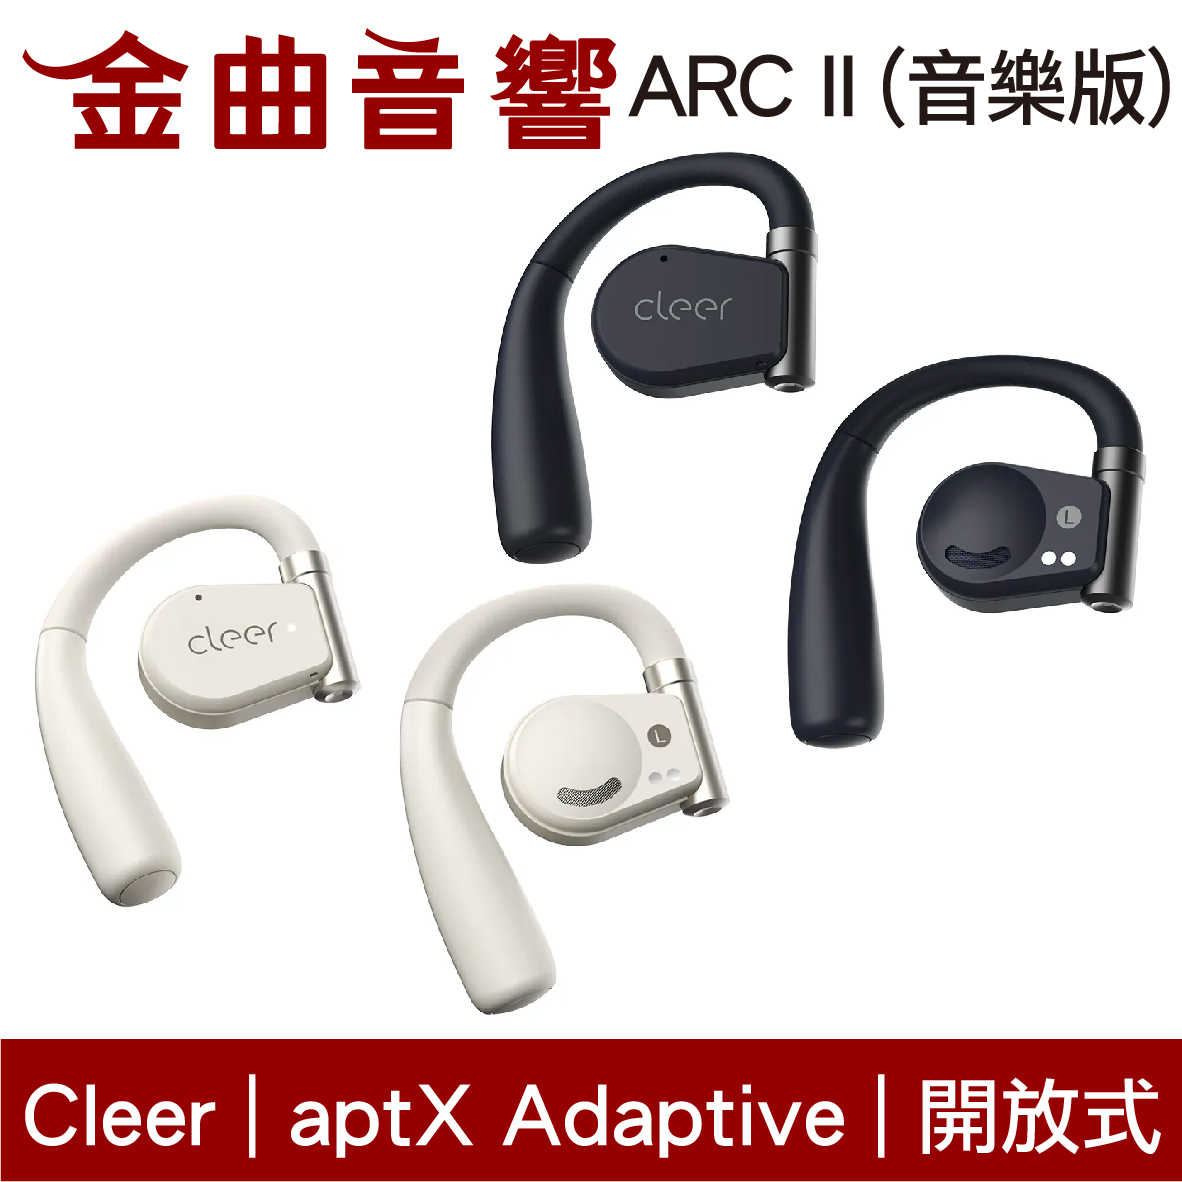 Cleer ARC II 音樂版 多點連線 久坐提醒 IPX5 免入耳 開放式 真無線 藍牙耳機 | 金曲音響